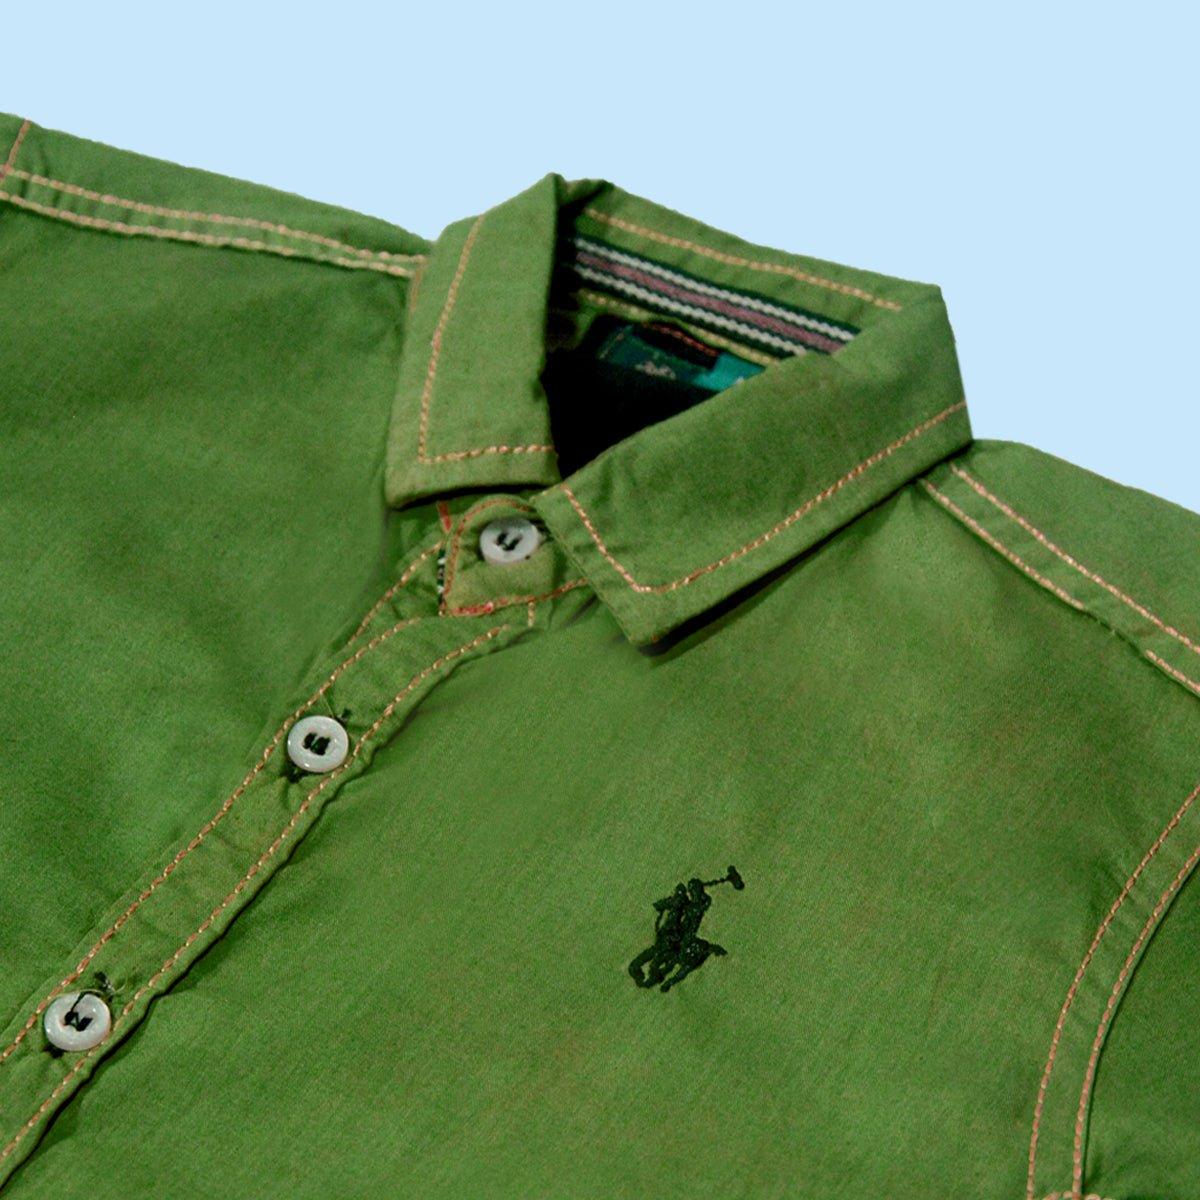 Green Polo Shirt For boys - Miniwears